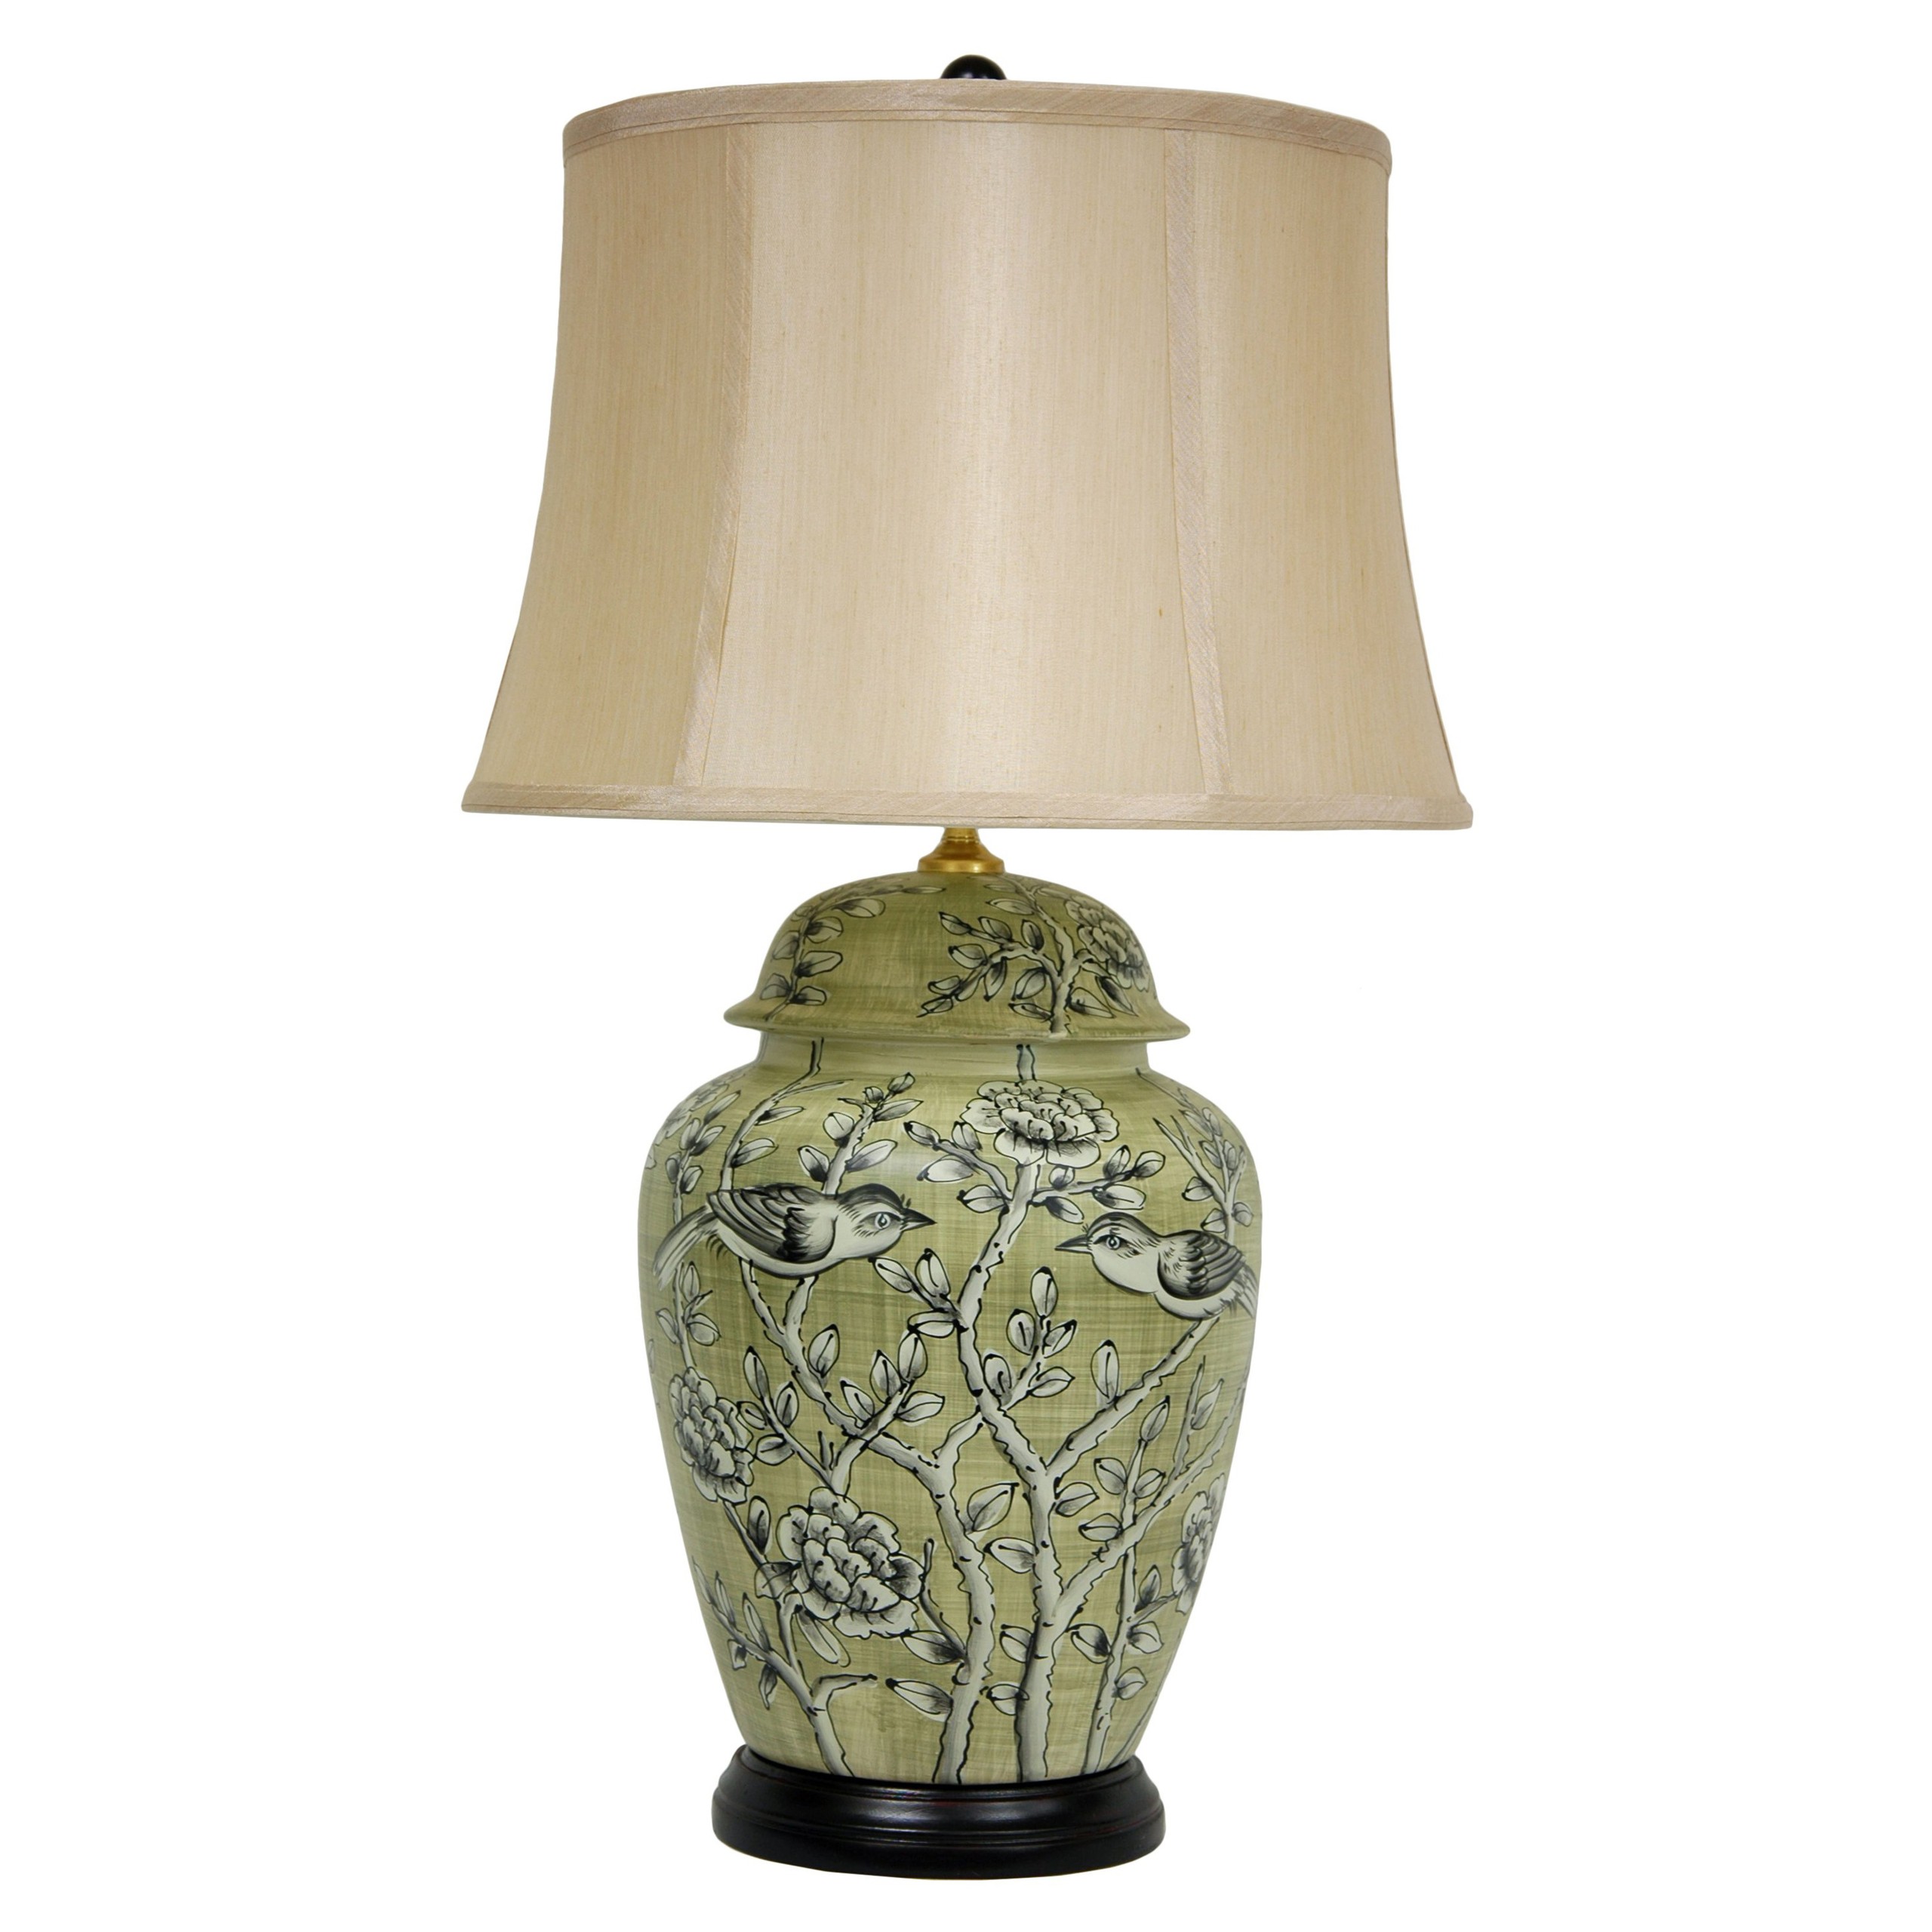 Fine porcelain ceramic vase lamp with a classic ginger jar